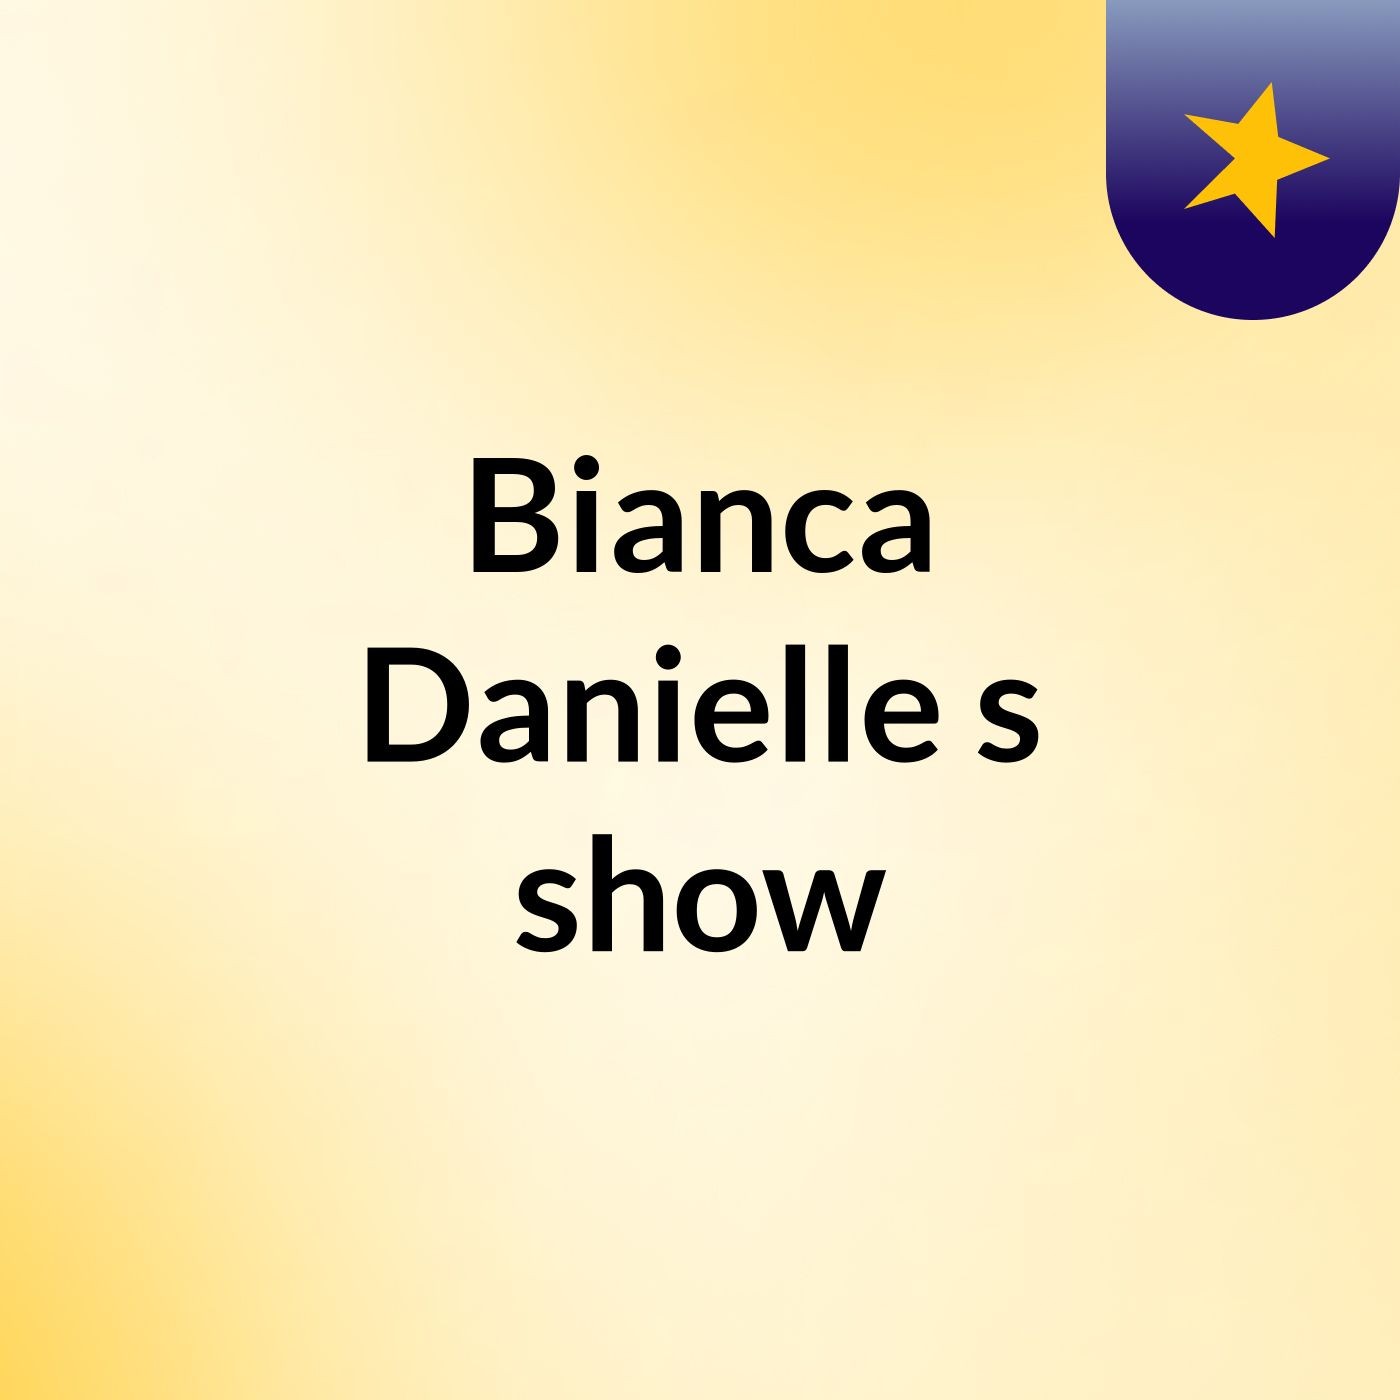 Bianca Danielle's show